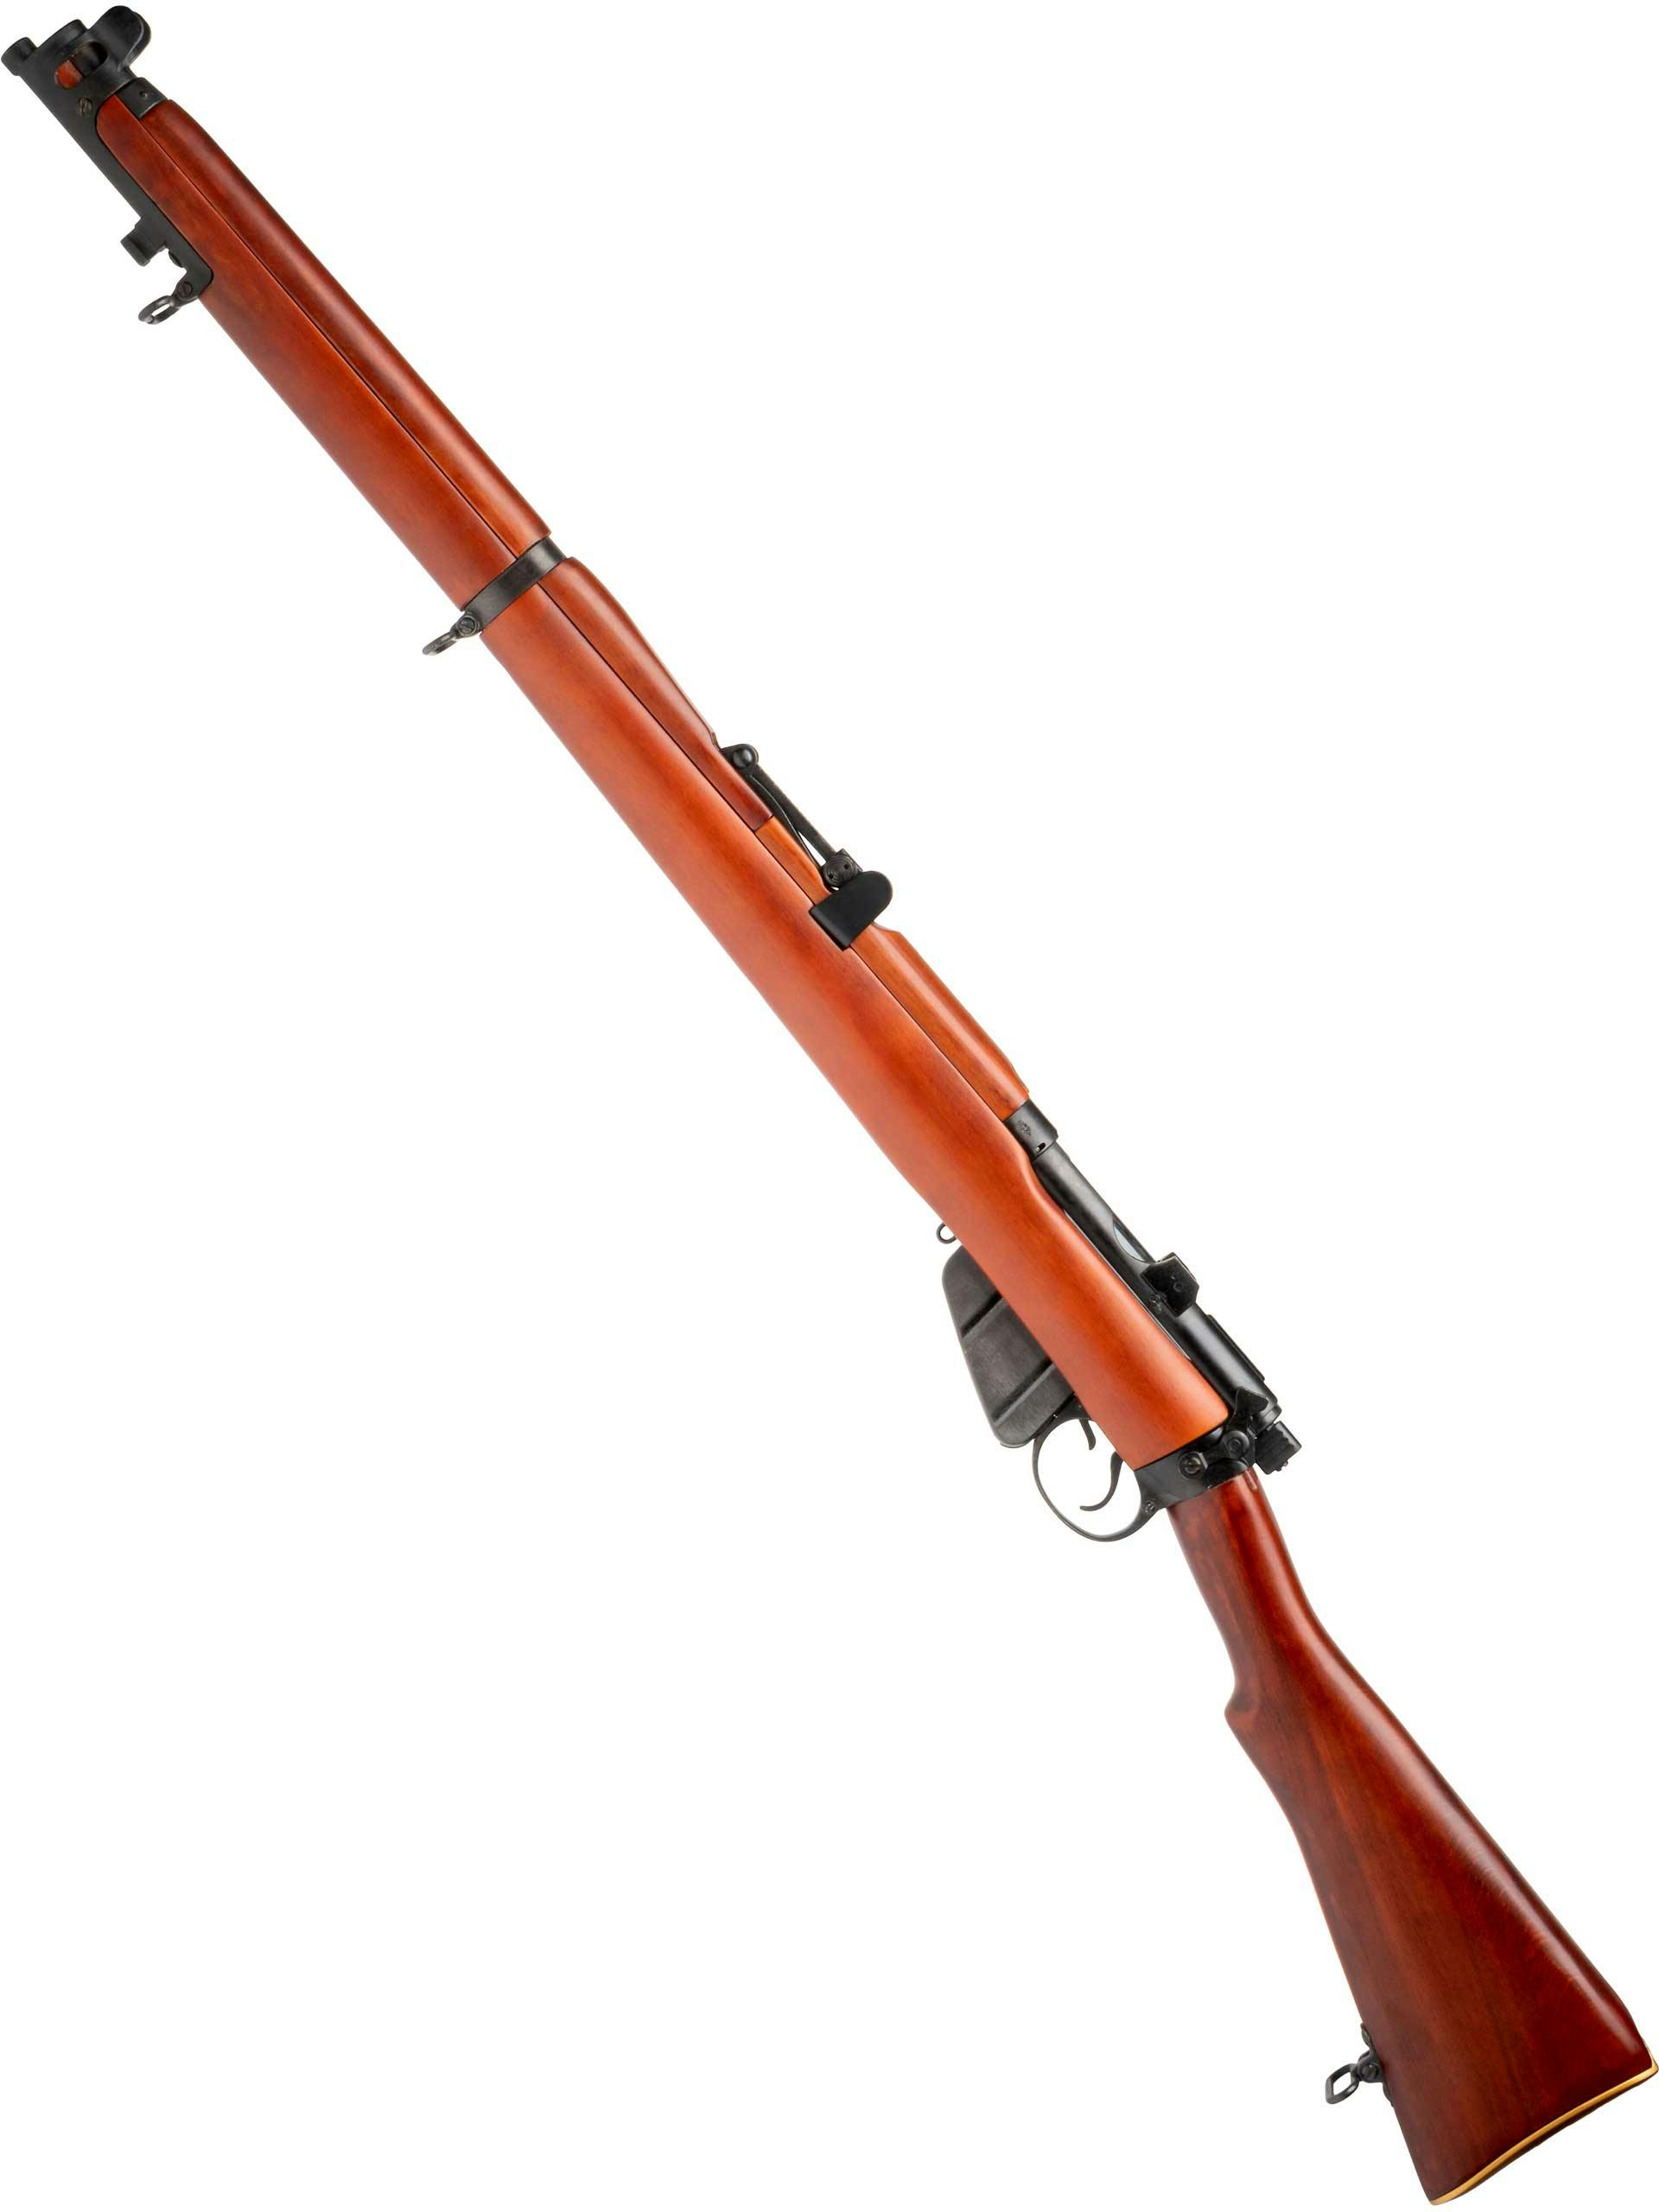 Sniper Kit 1-MK3 Enfield Sniper Rifle Stock Kit .303 Enfield No. 1